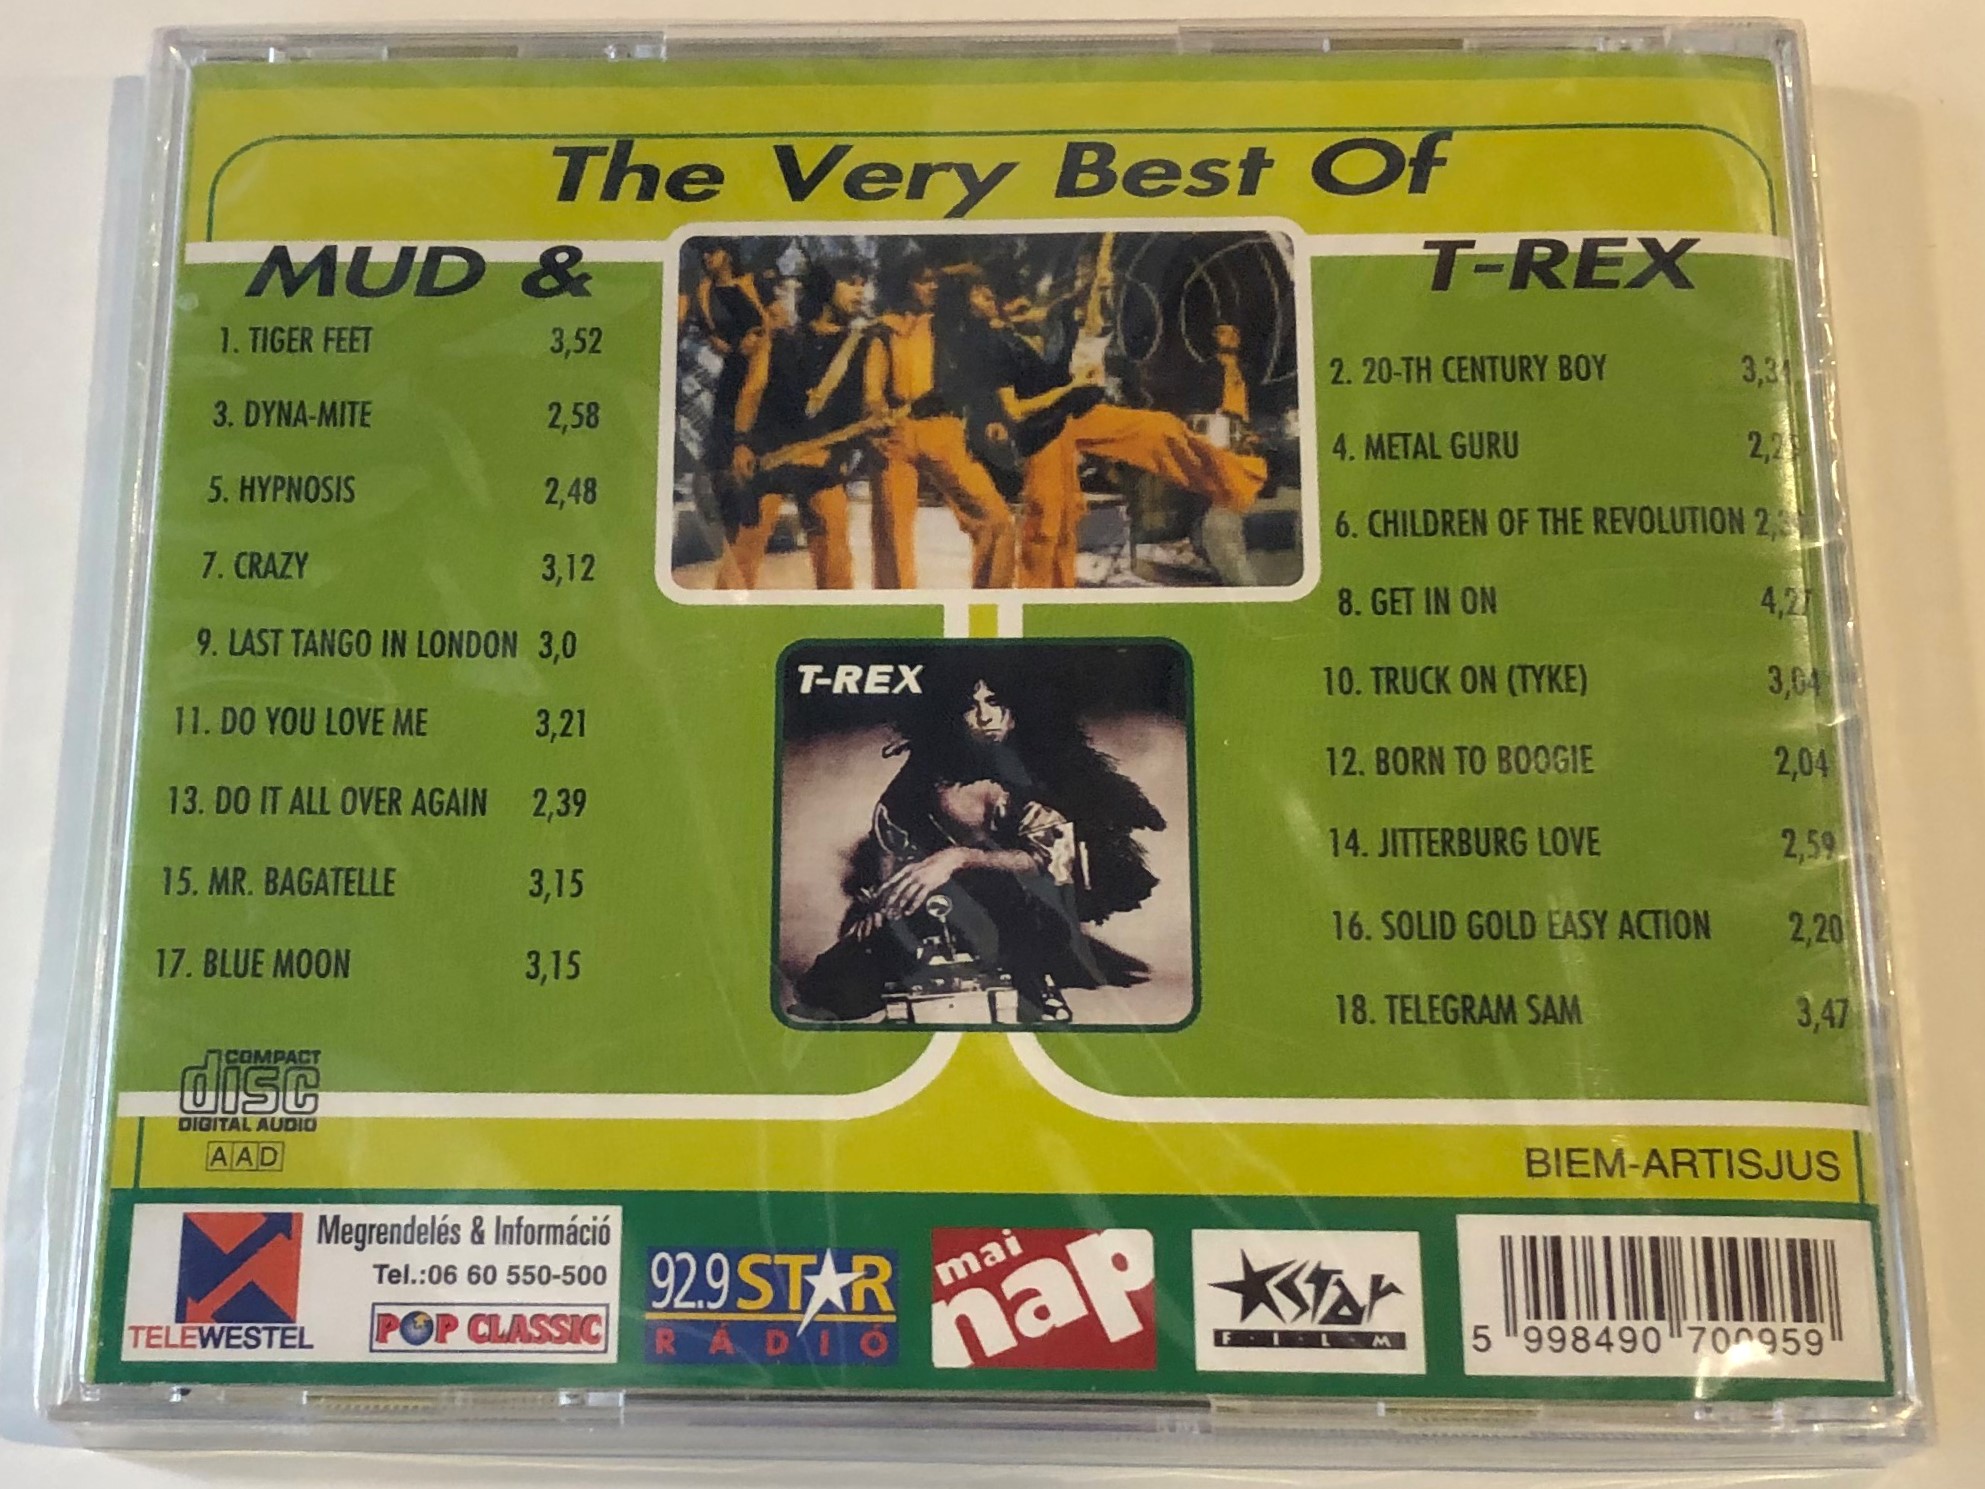 the-very-best-of-mud-t-rex-pop-classic-audio-cd-5998490700959-2-.jpg